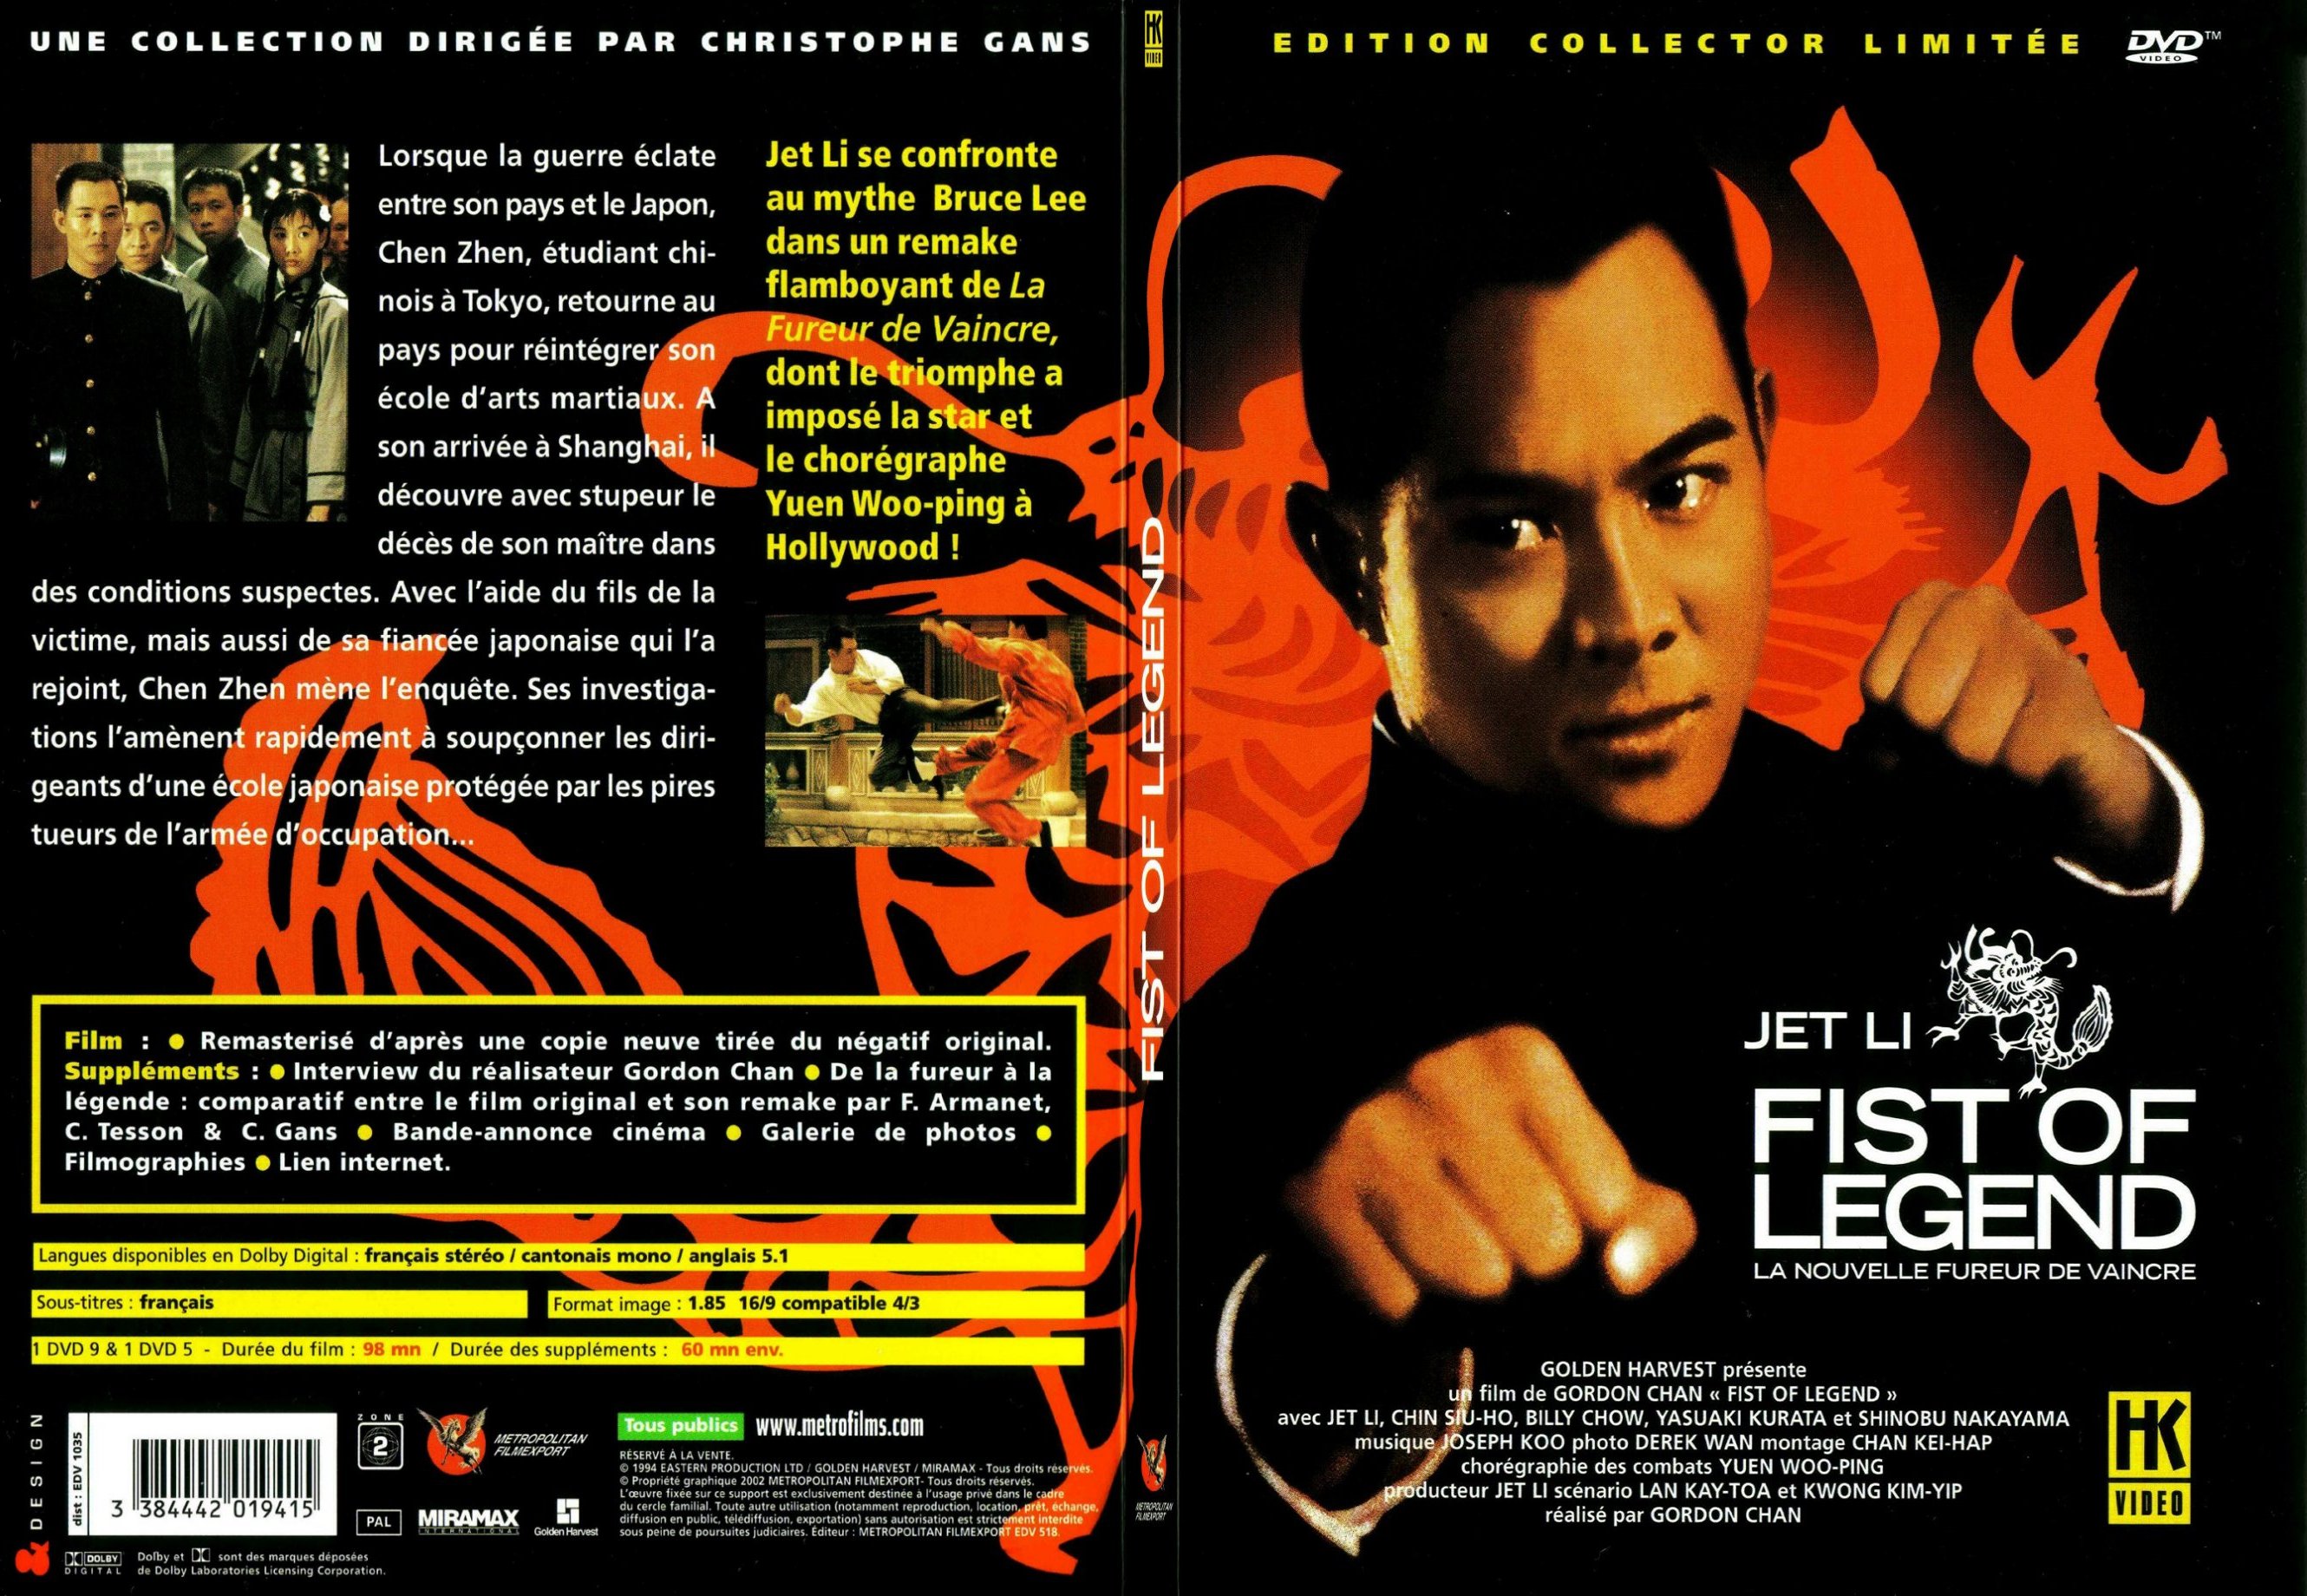 Jaquette DVD Fist of Legend - SLIM